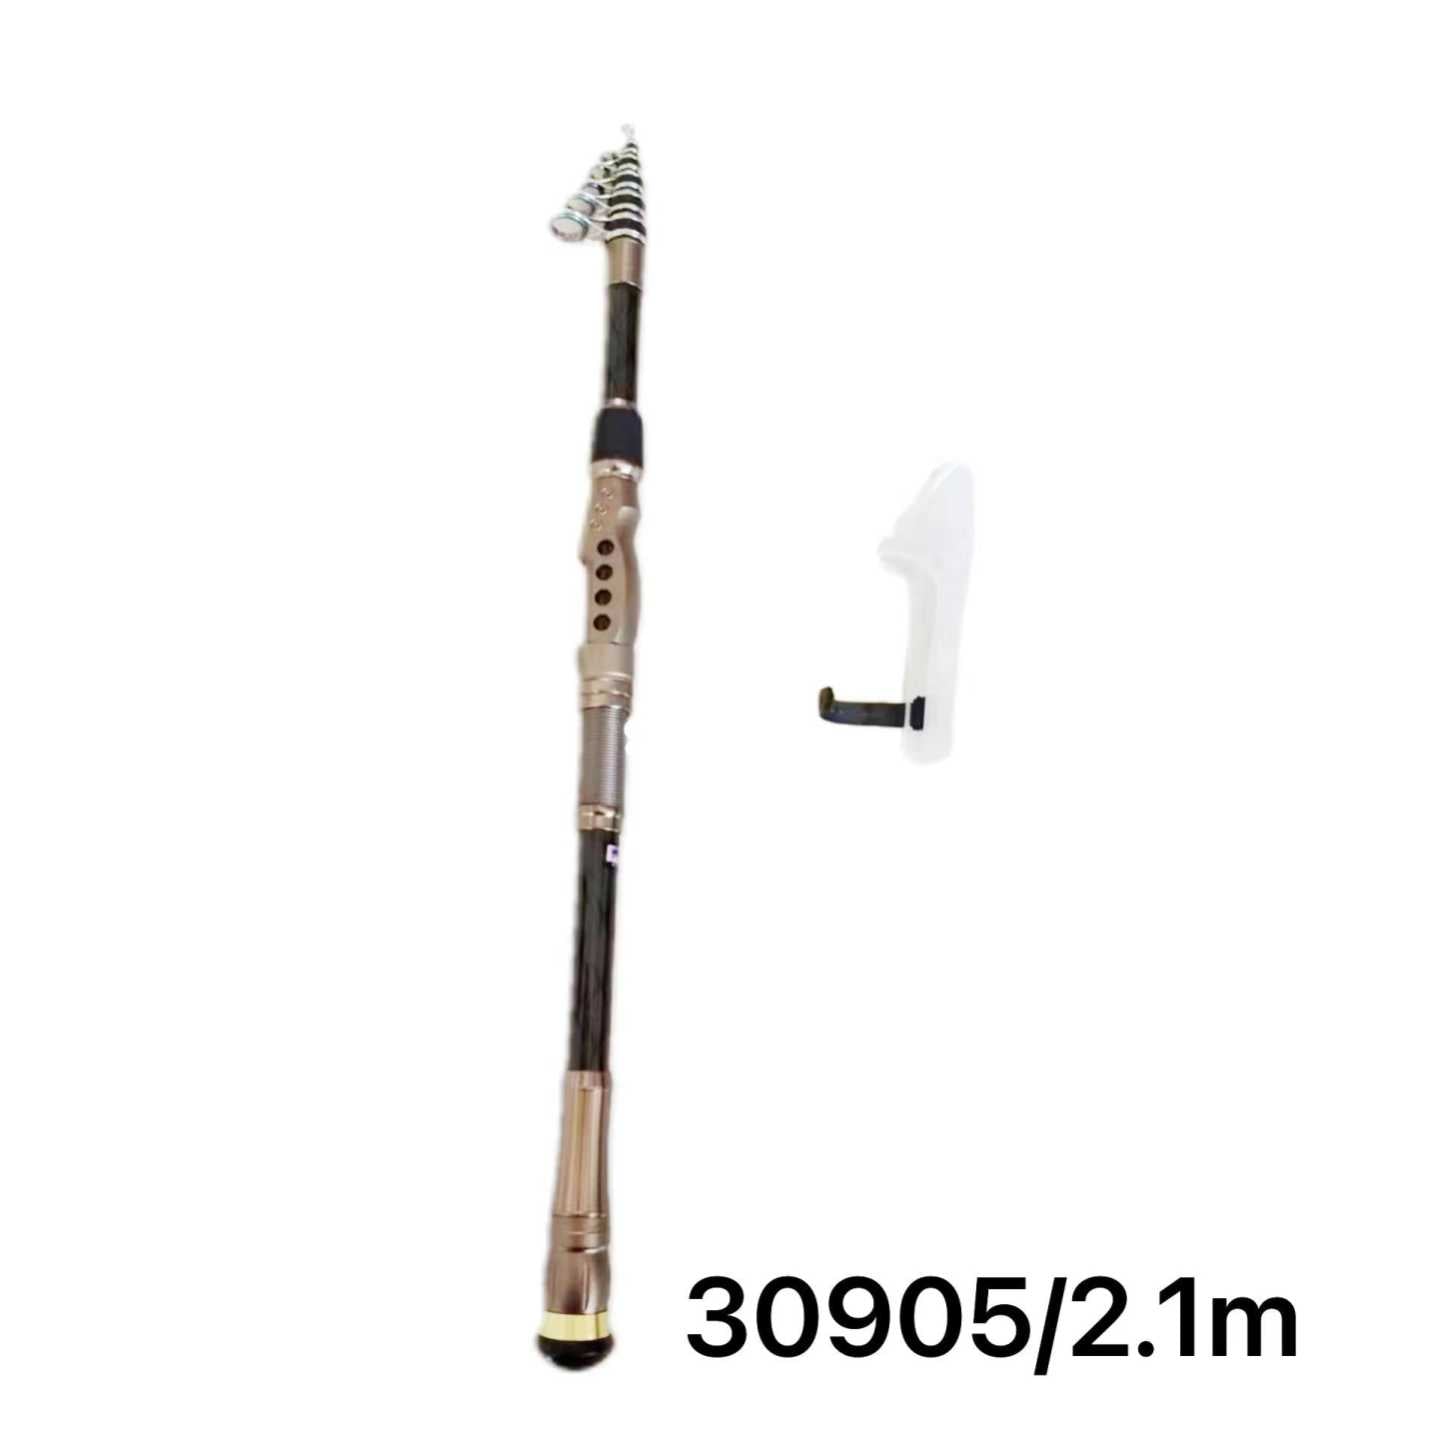 Fishing rod - Telescopic - 2.1m - 30905